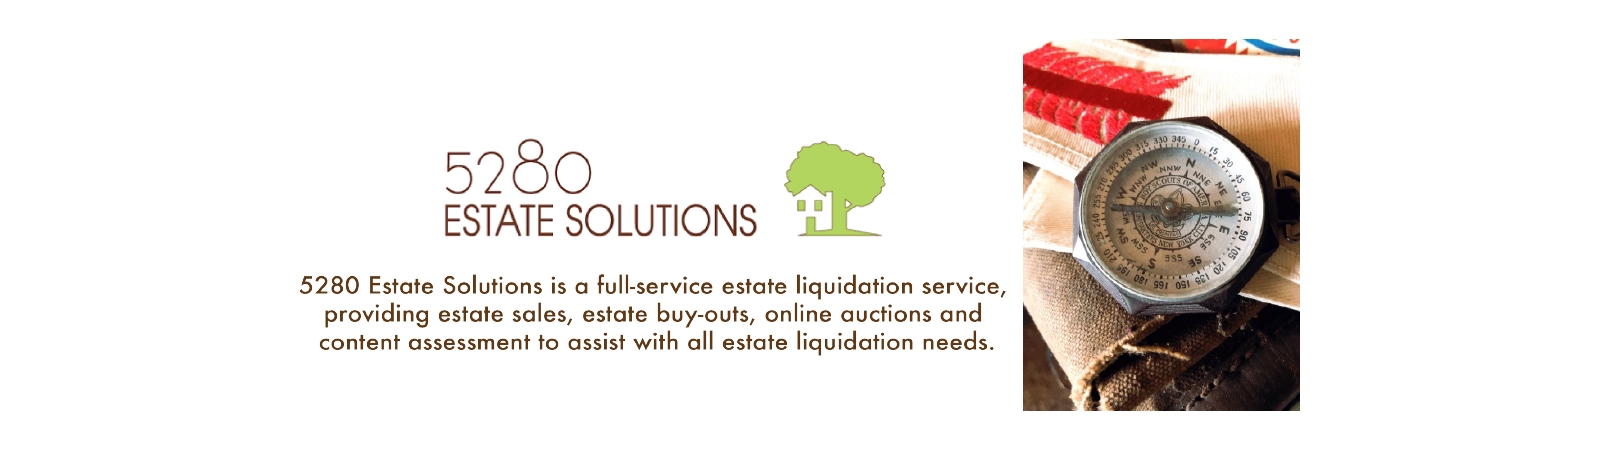 5280 Estate Solutions | Auction Ninja